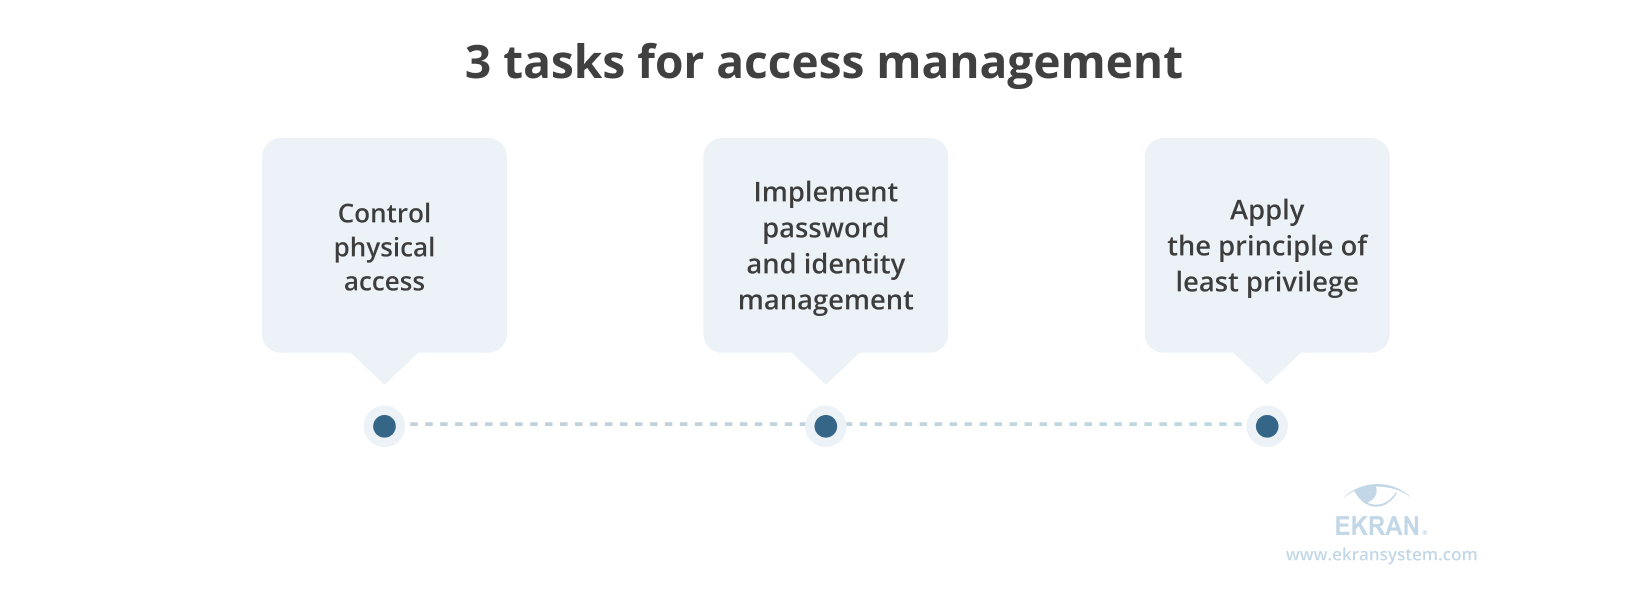 tasks for access management